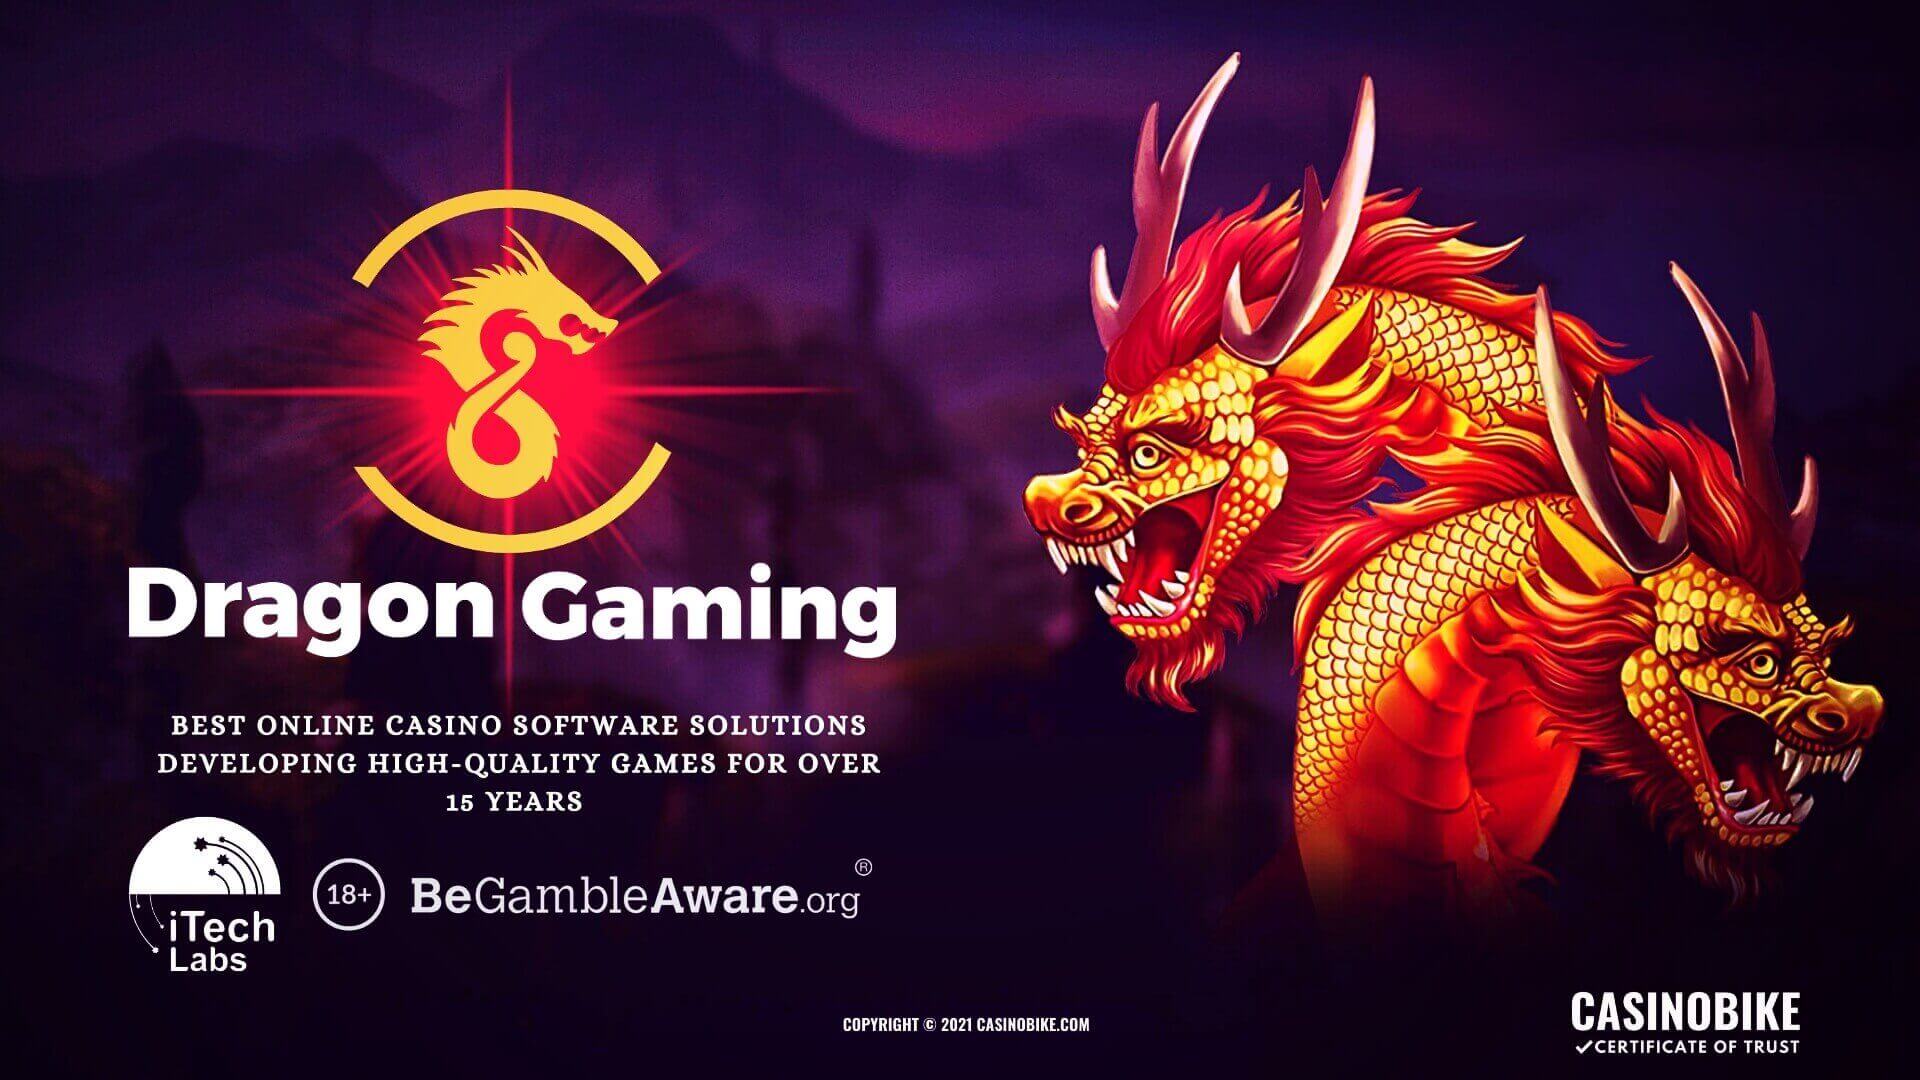 Dragon Gaming Online Casino Games Provider